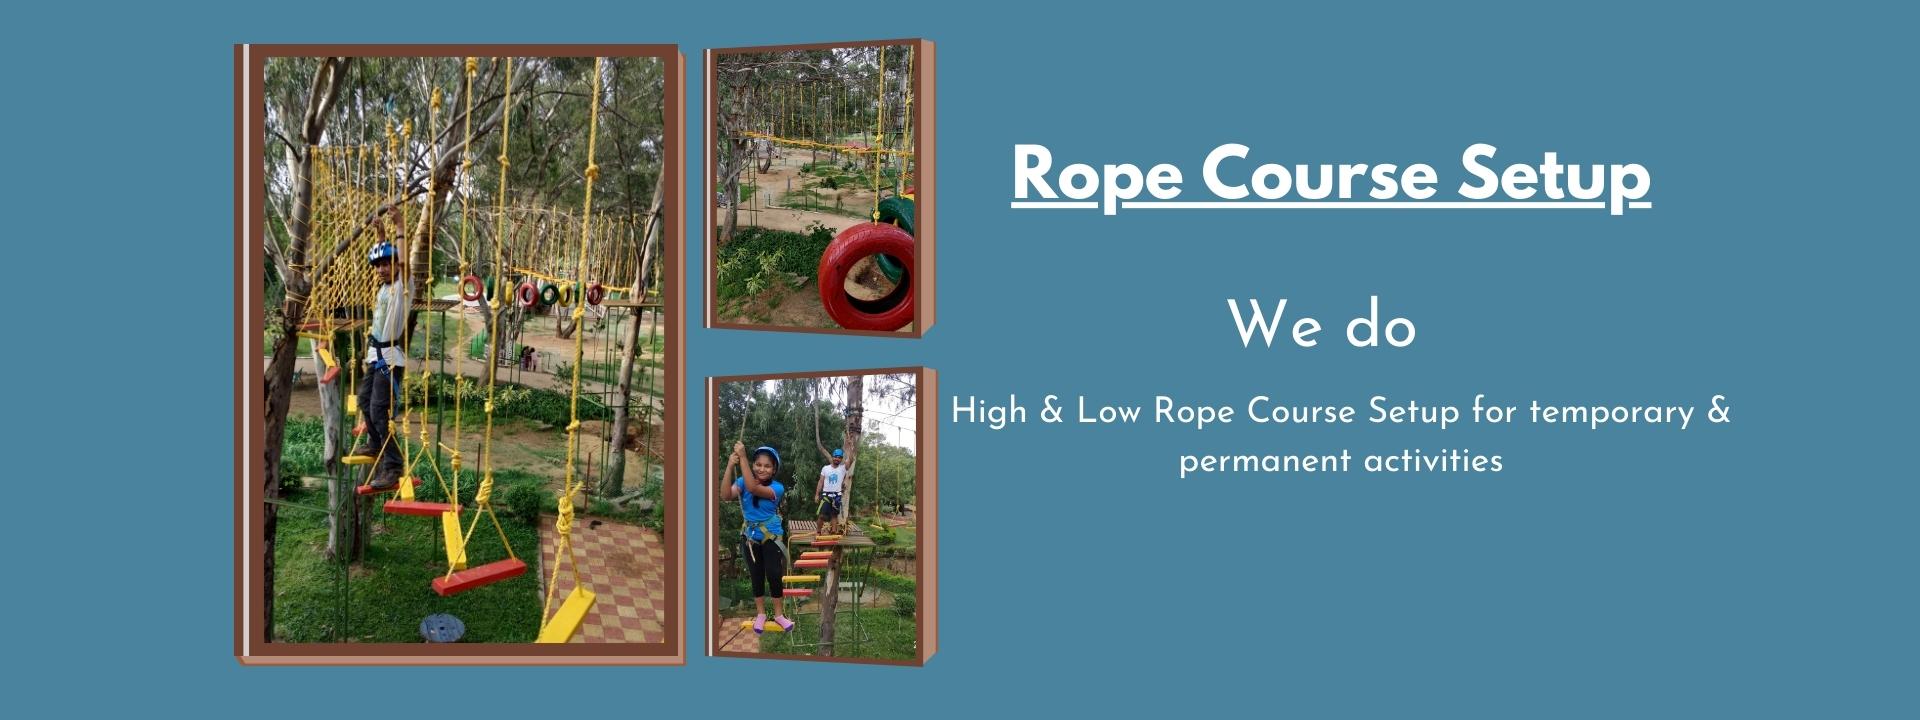 Rope course Setup | Low & High Rope Course Setup